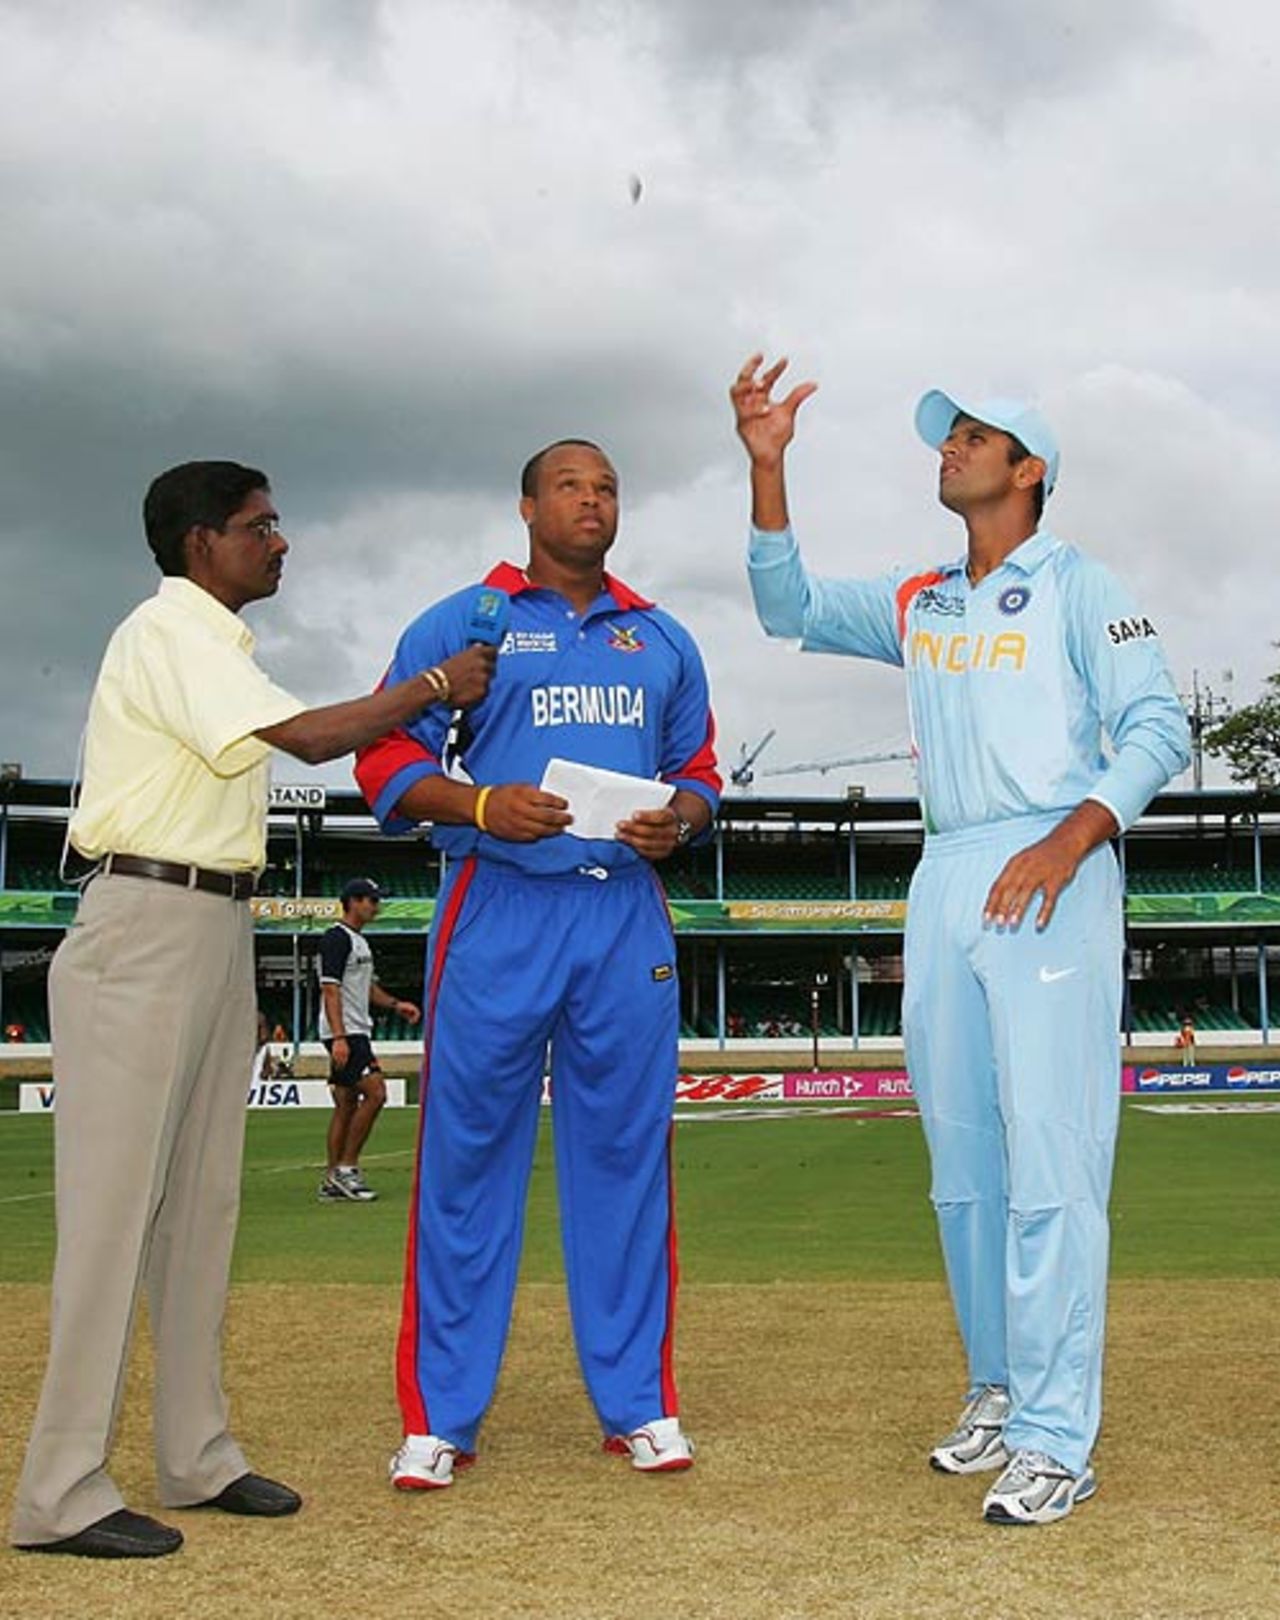 Irvine Romaine and Rahul Dravid at the toss, Bermuda v India, Group B, Trinidad, March 19, 2007